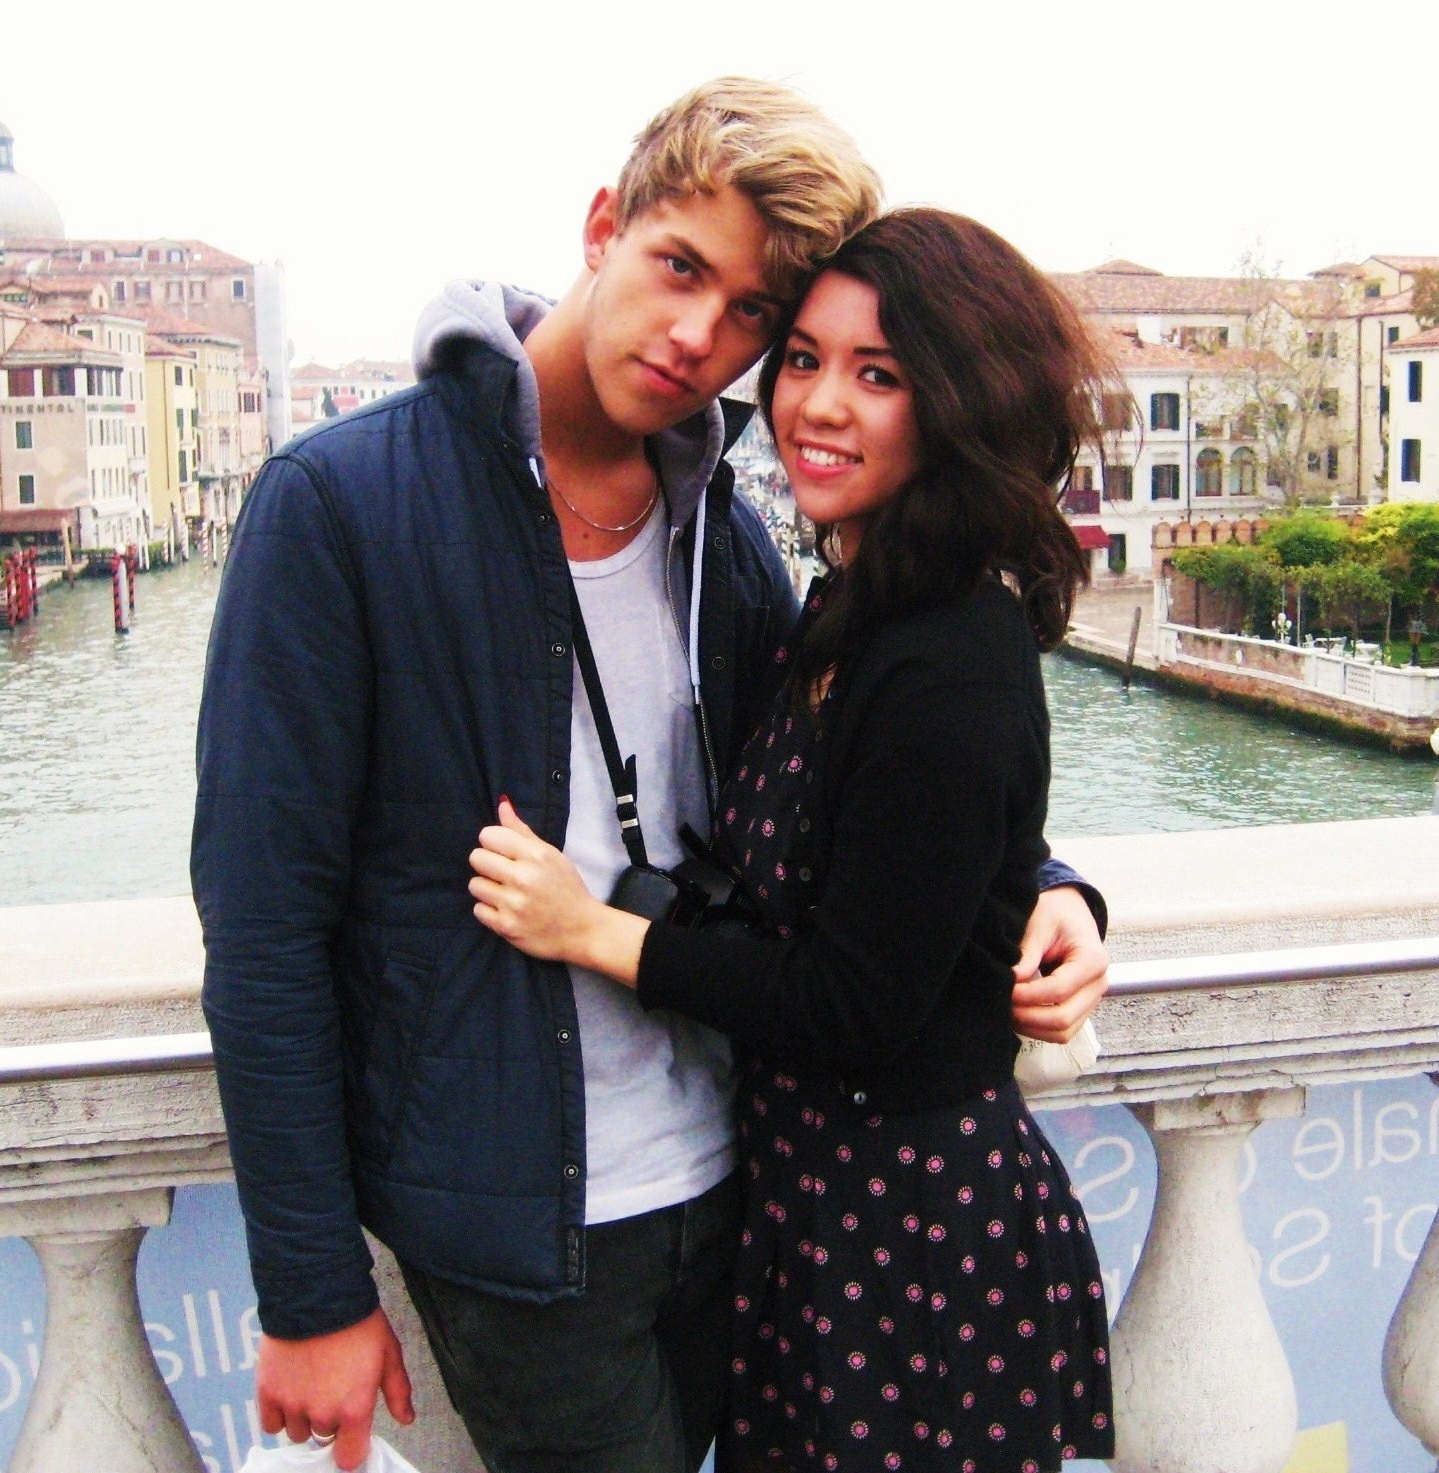 Venice, romantic holiday, couple